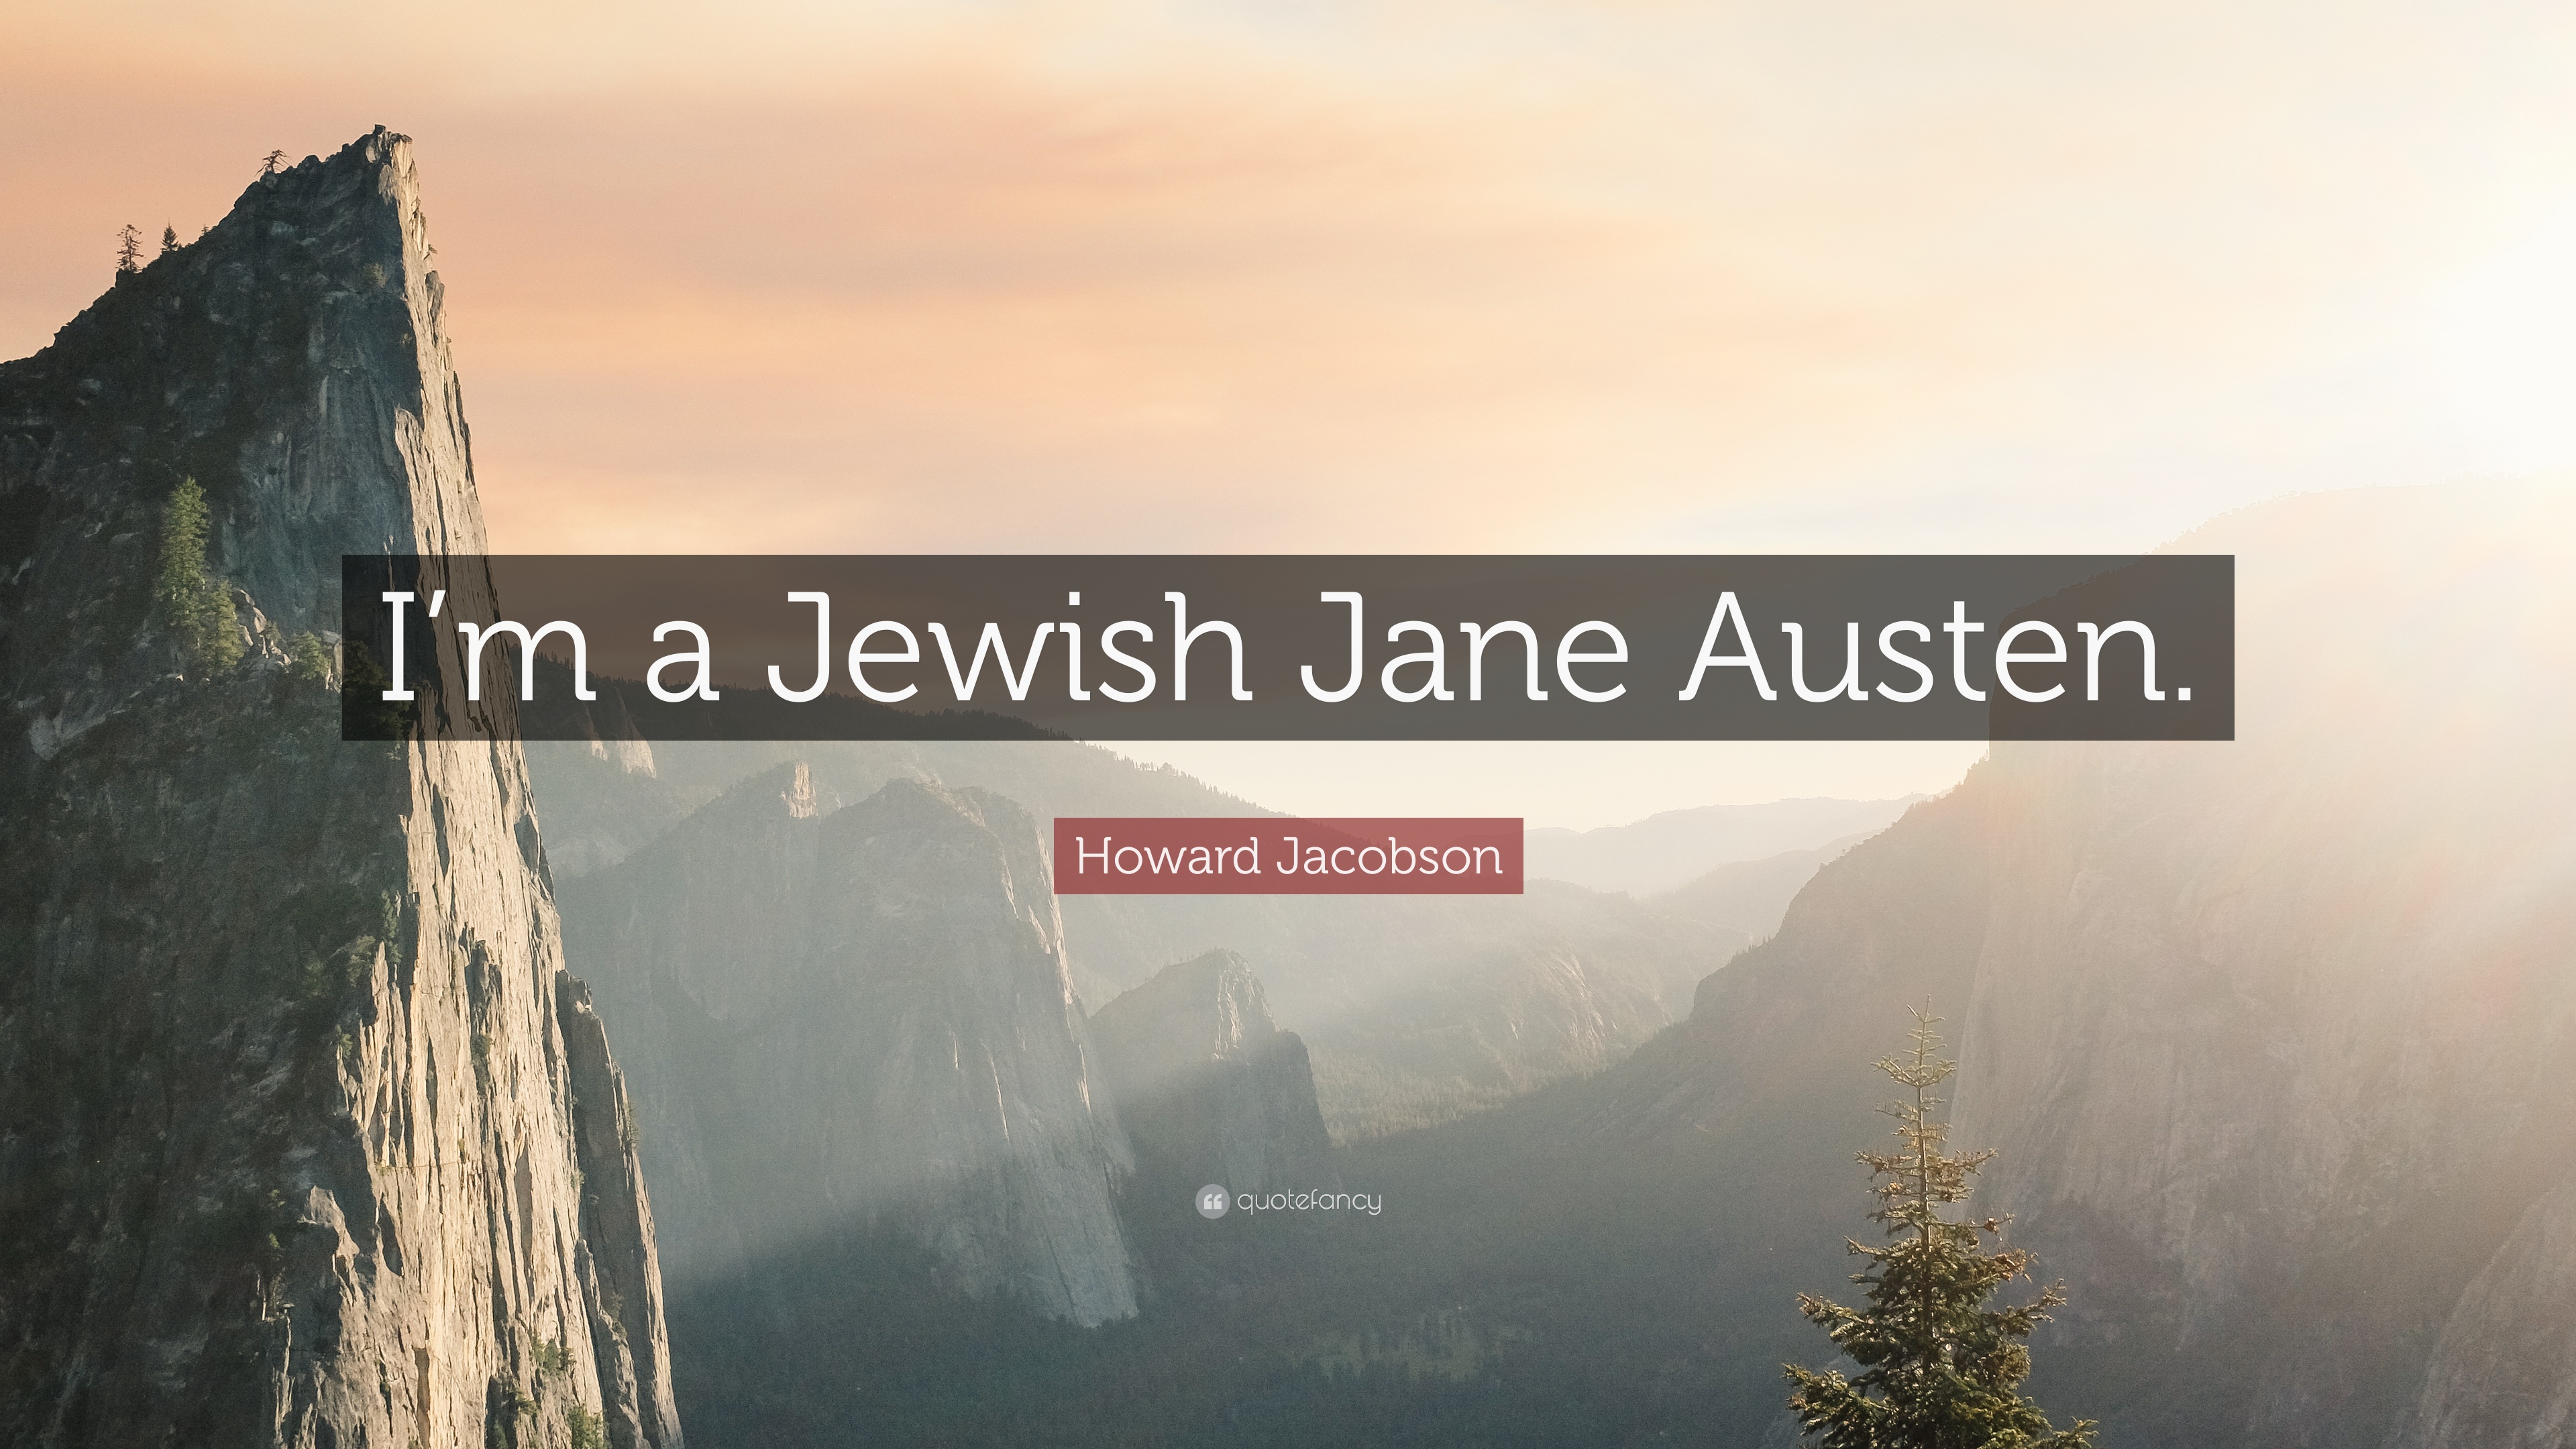 Howard Jacobson Quote: “I'm a Jewish Jane Austen.” 7 wallpaper